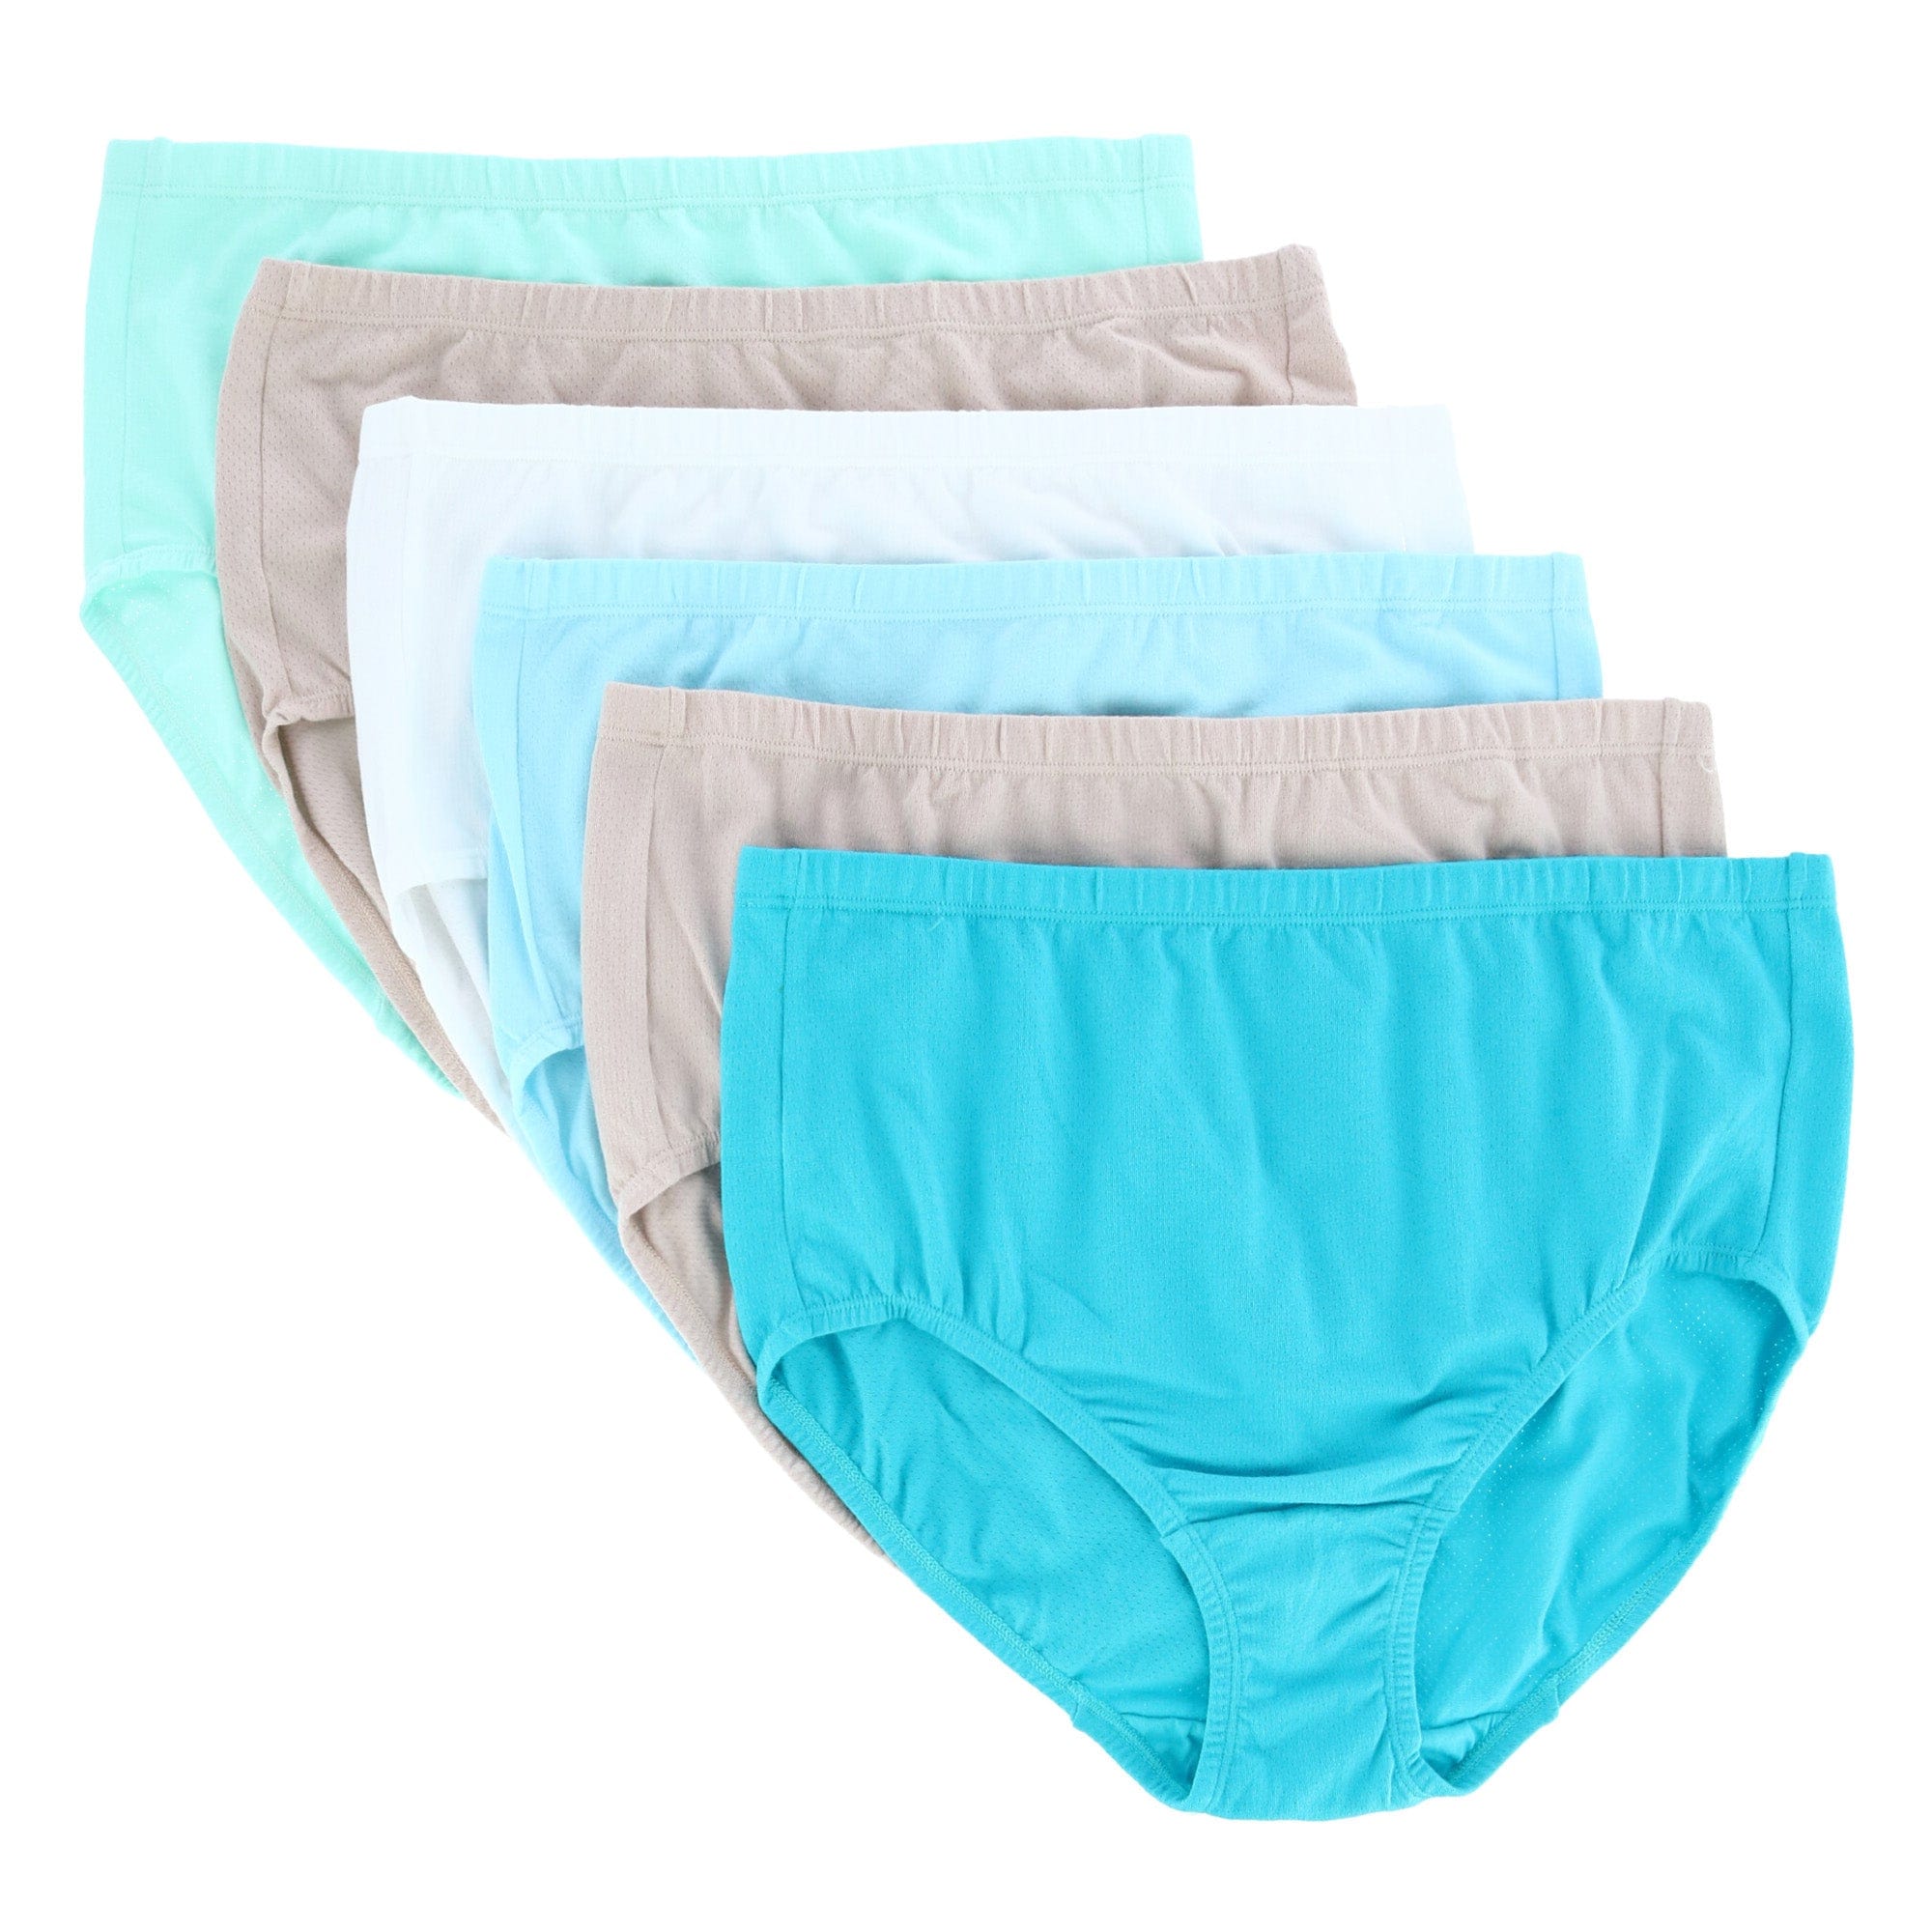 Women's Plus Size Cotton-Mesh Brief Underwear (6 Pack) by Fruit of